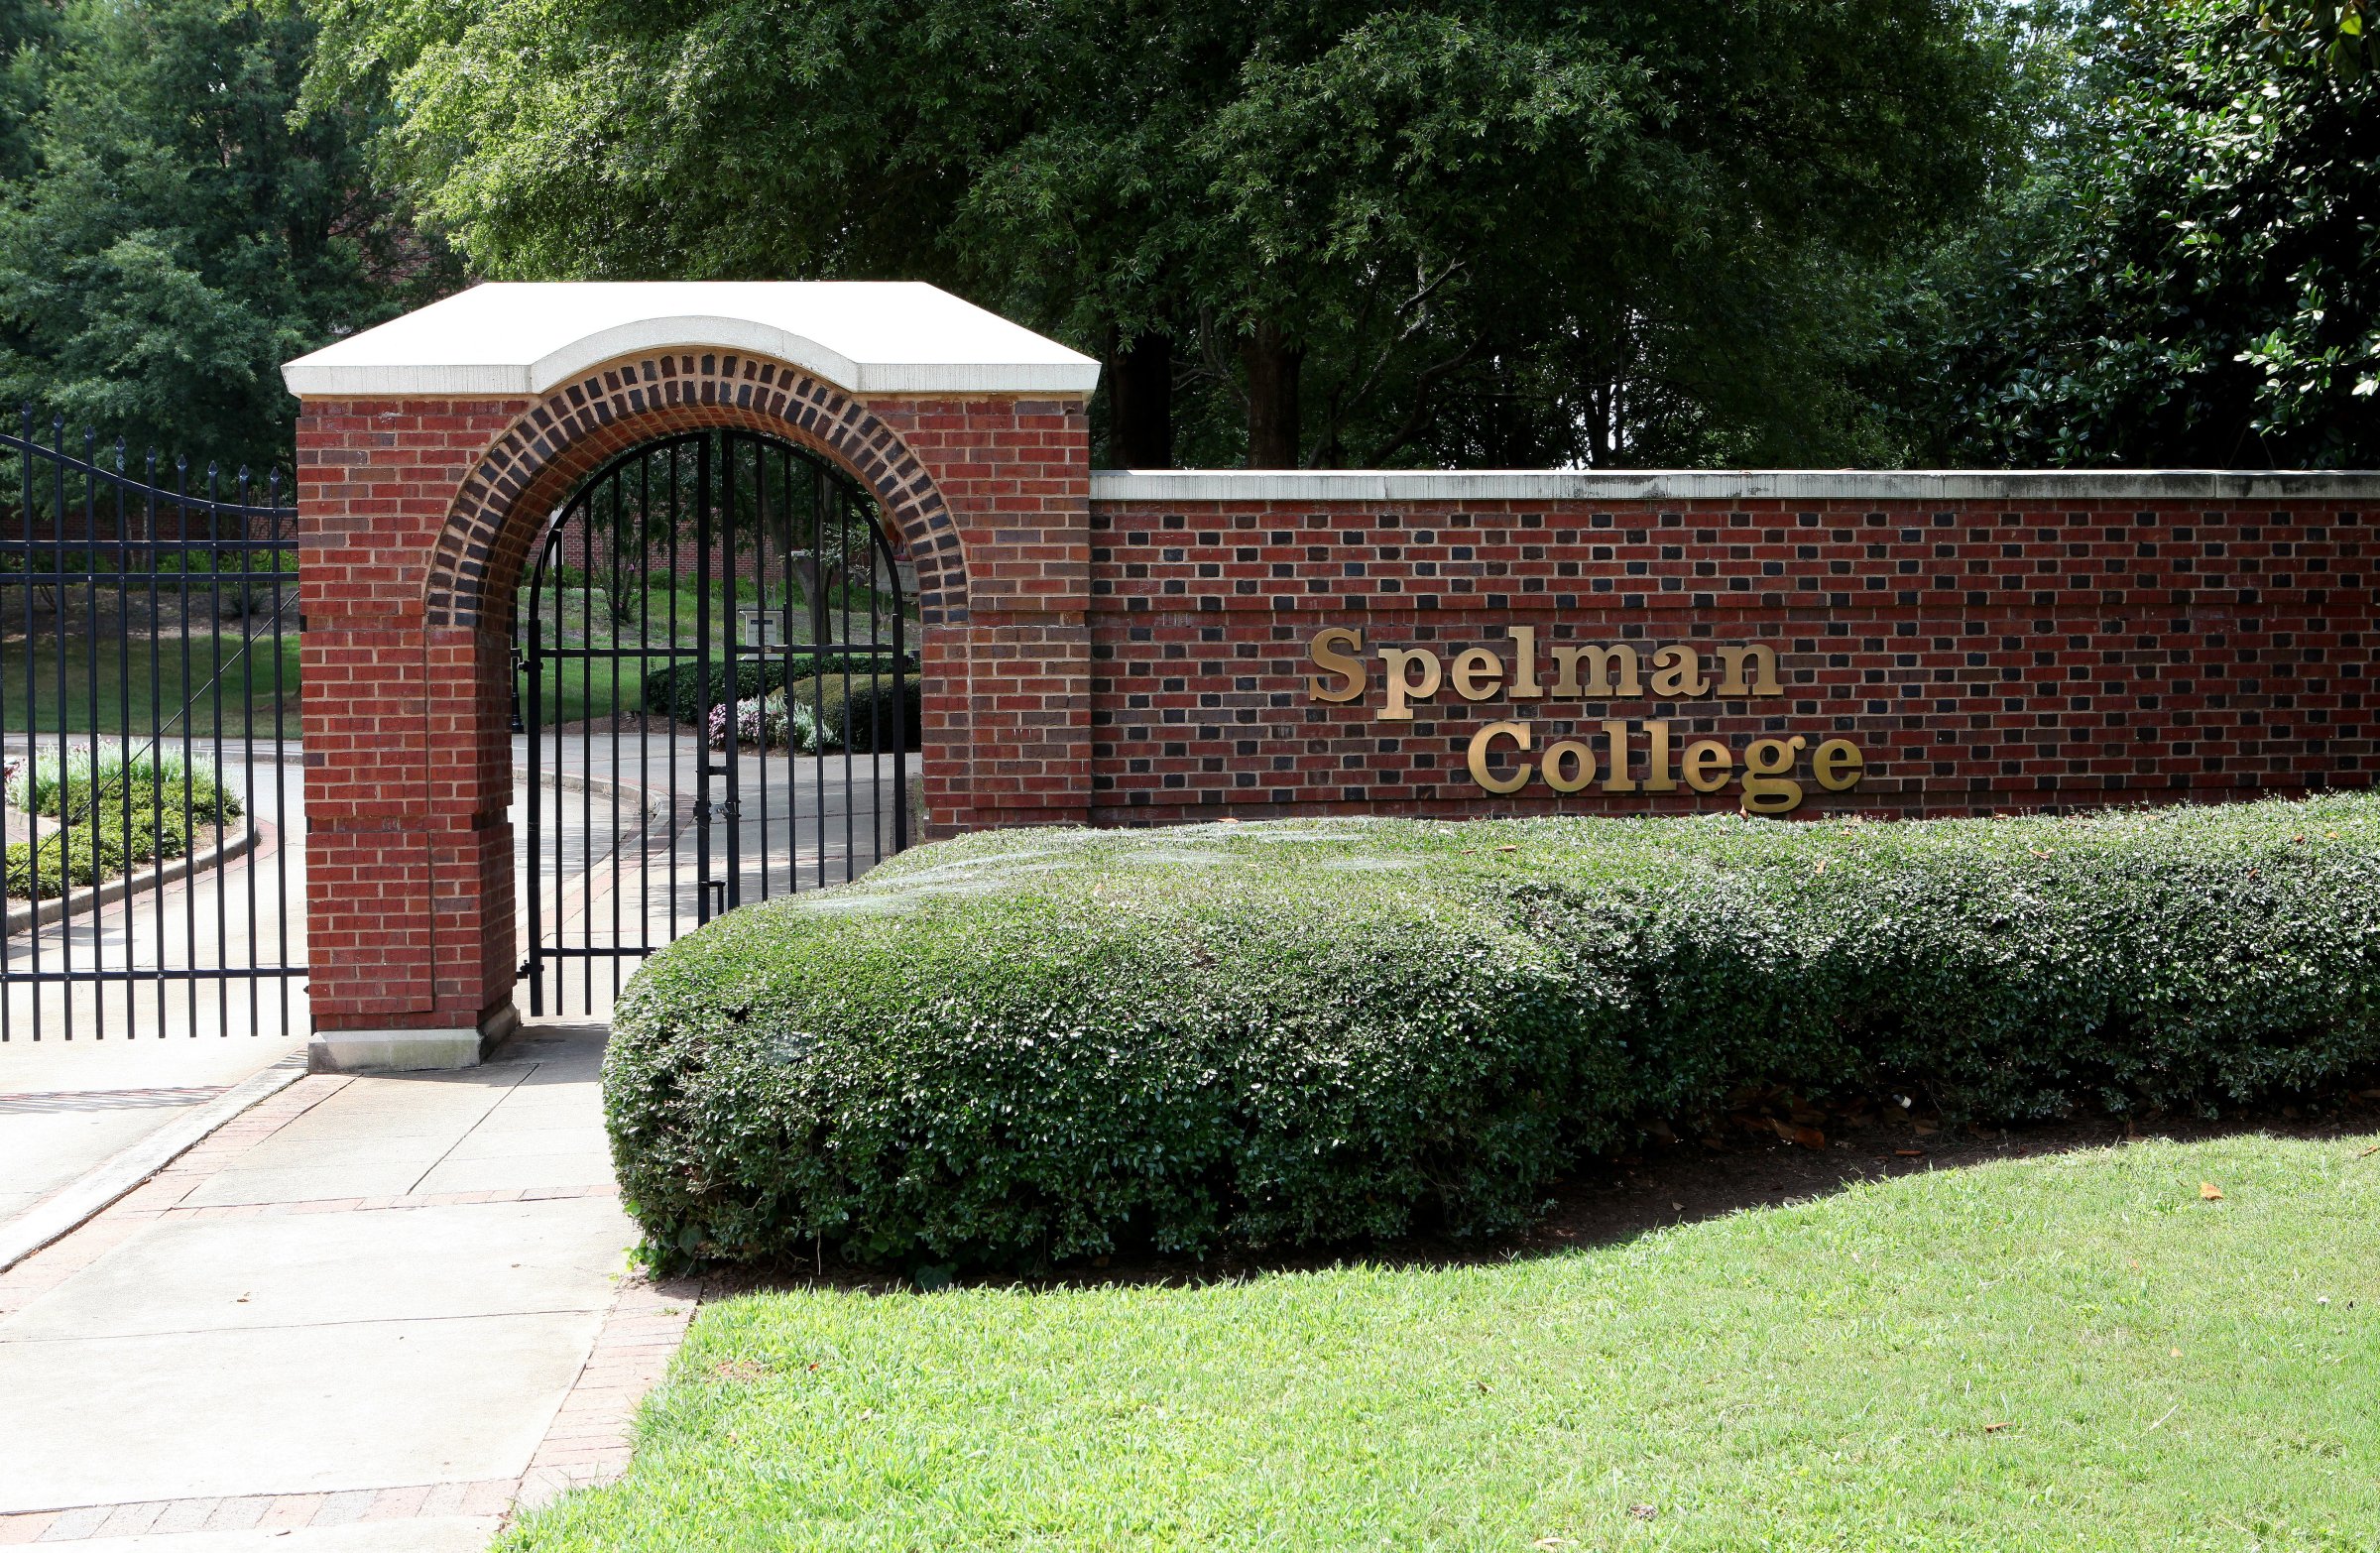 Spelman College's gate is seen on July 18, 2015 in Atlanta, Georgia.